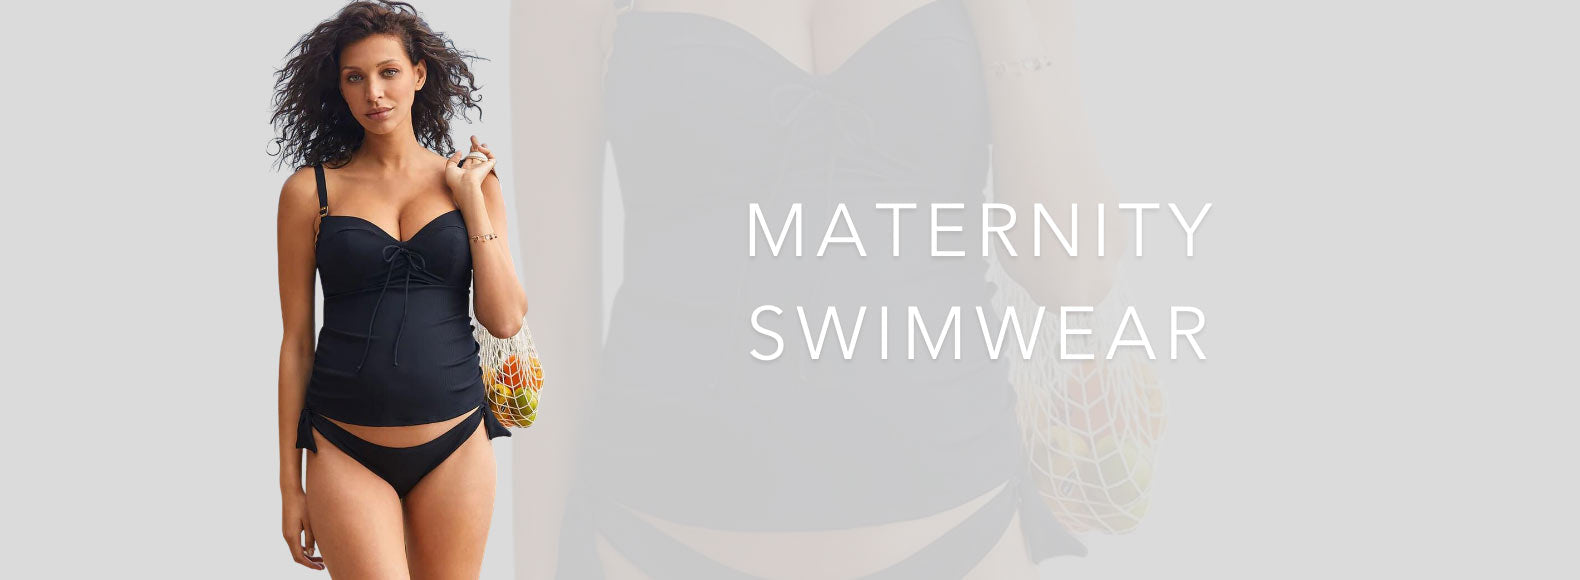 Best Maternity Swimwear  Pregnancy Bathing Suits, Maternity